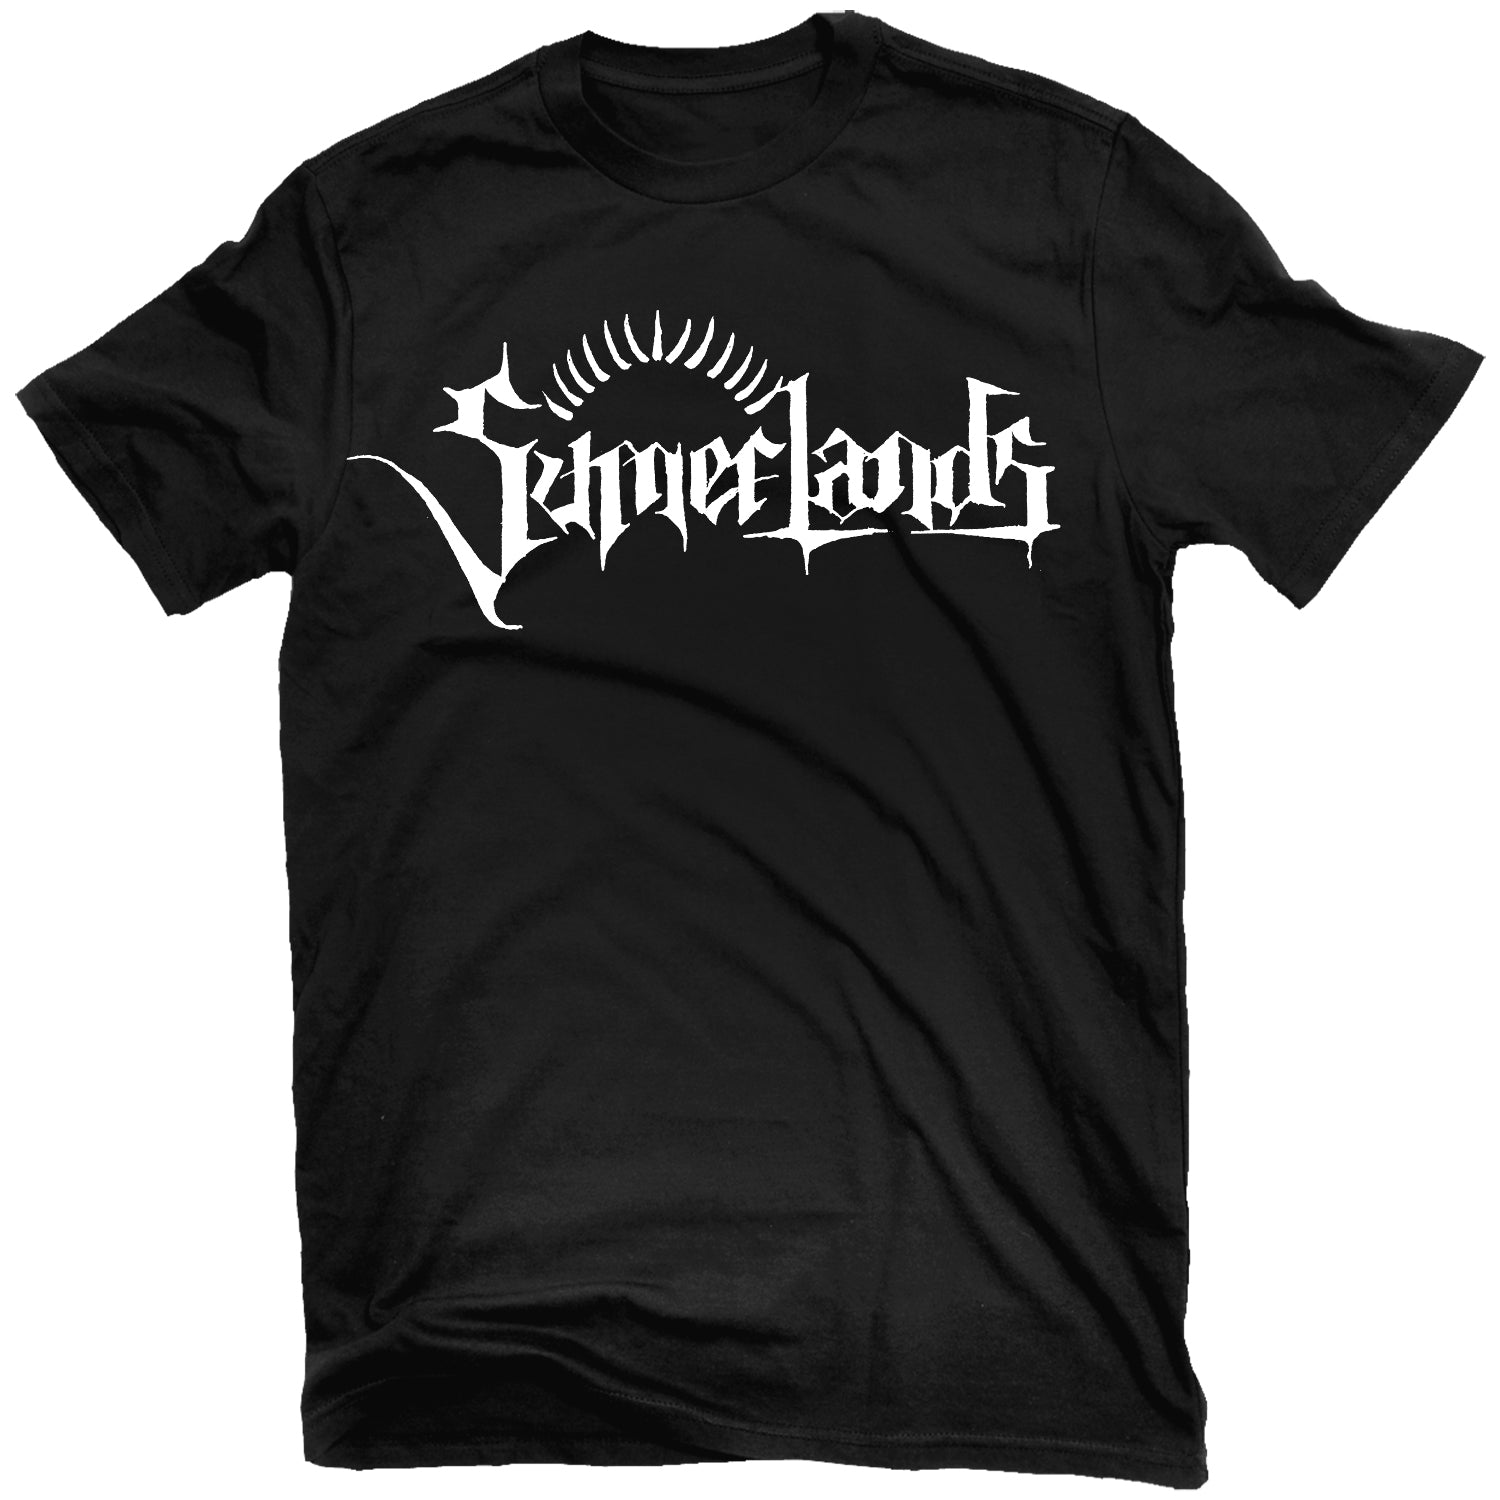 Sumerlands "Sumerlands" T-Shirt